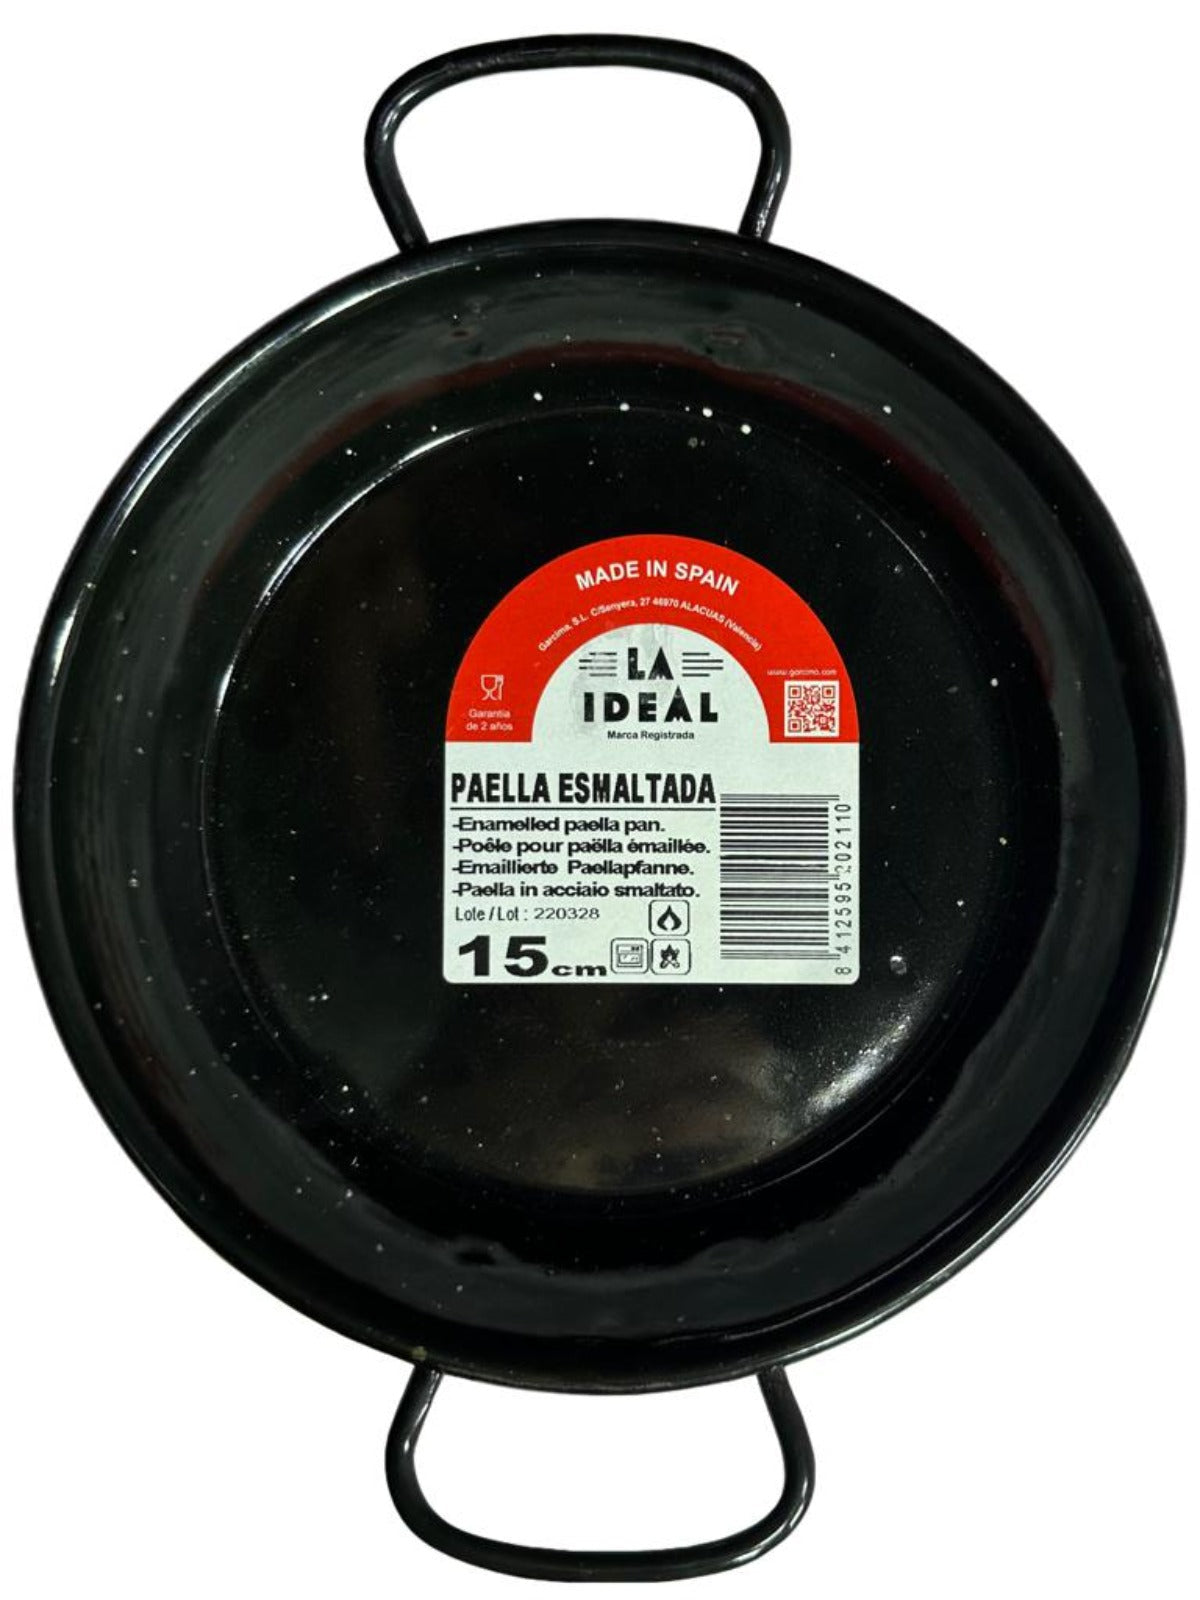 Garcima Paella Esmaltada Spanish Enamelled Paella Pan 15cm 10 pack